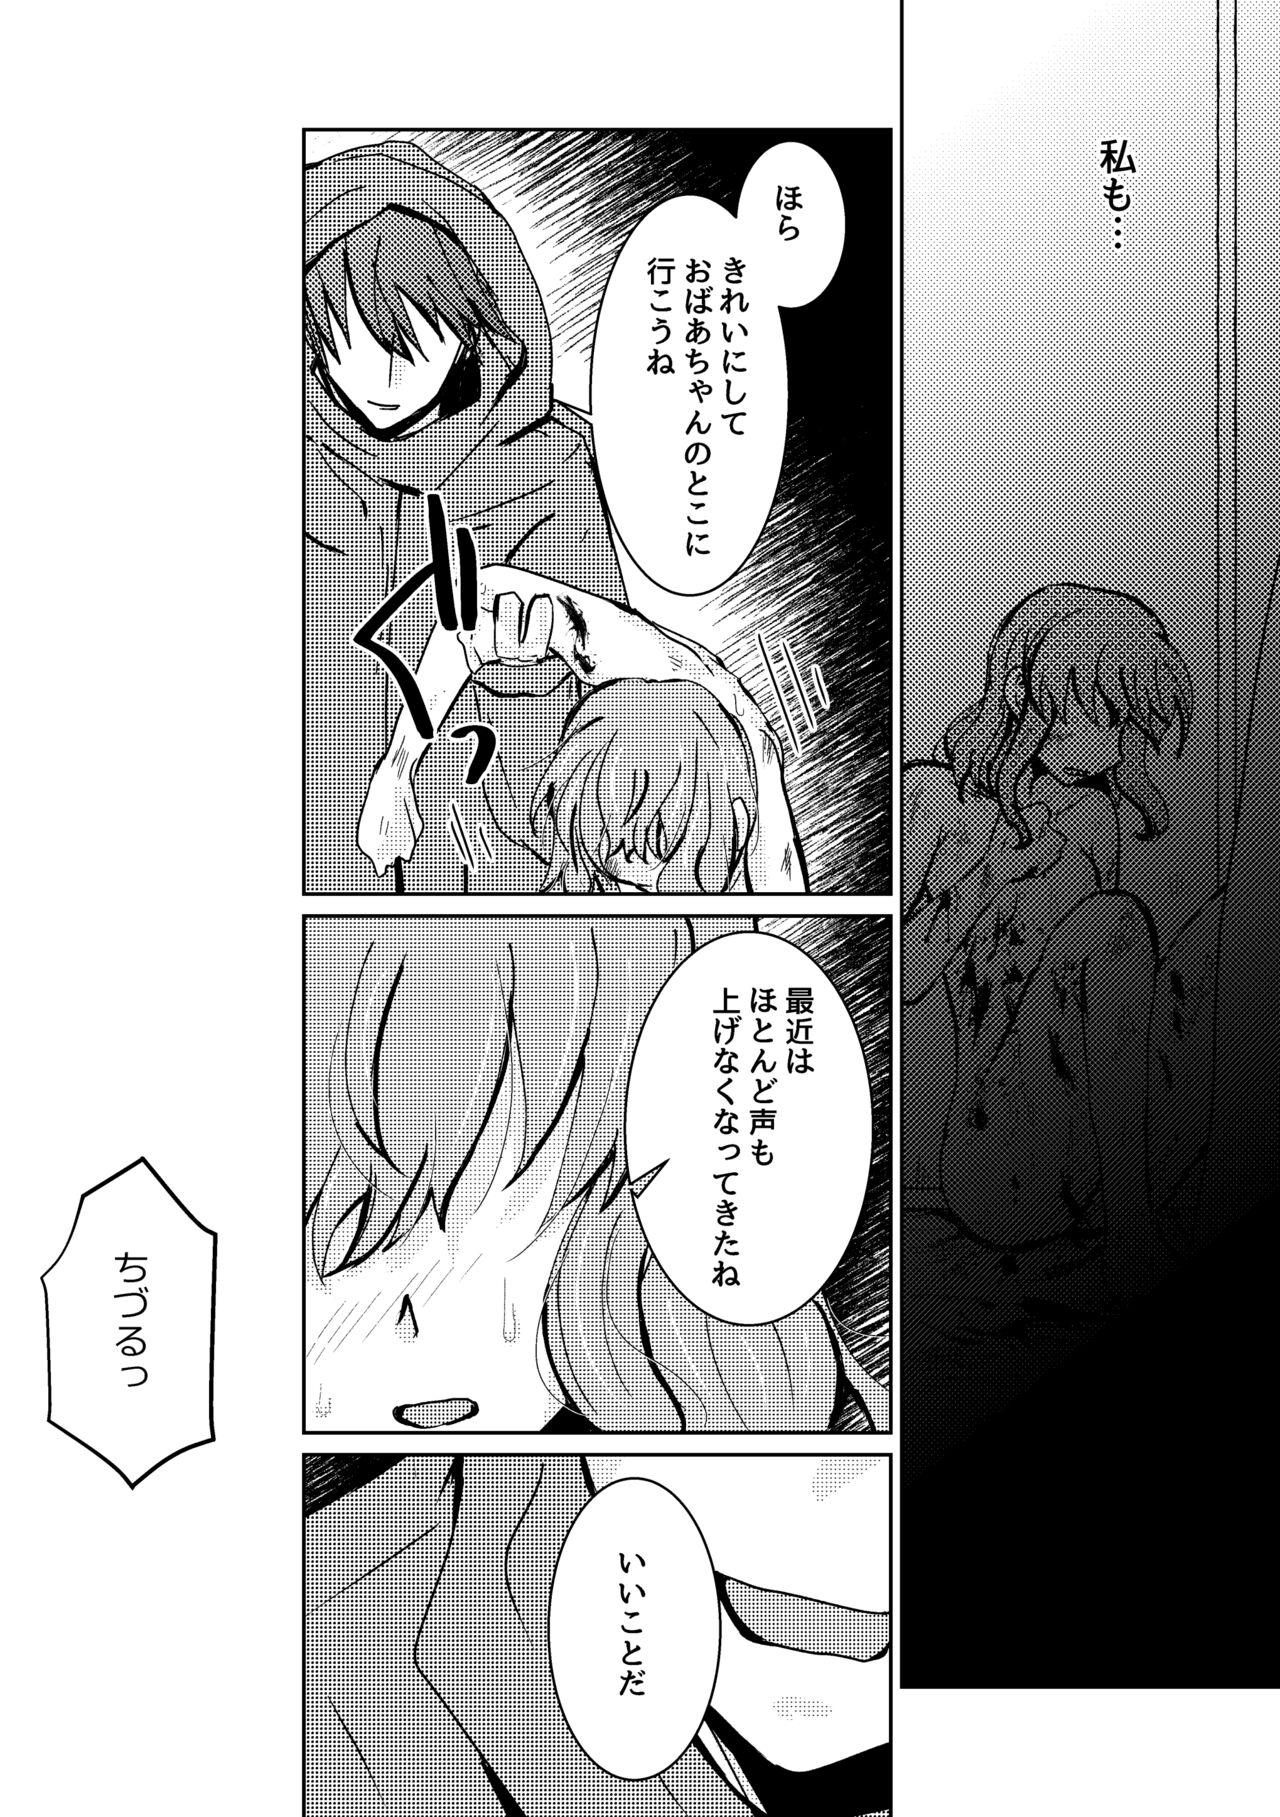 Brother Kareya Yoru no Hanaka Episode 3 Cameltoe - Page 7